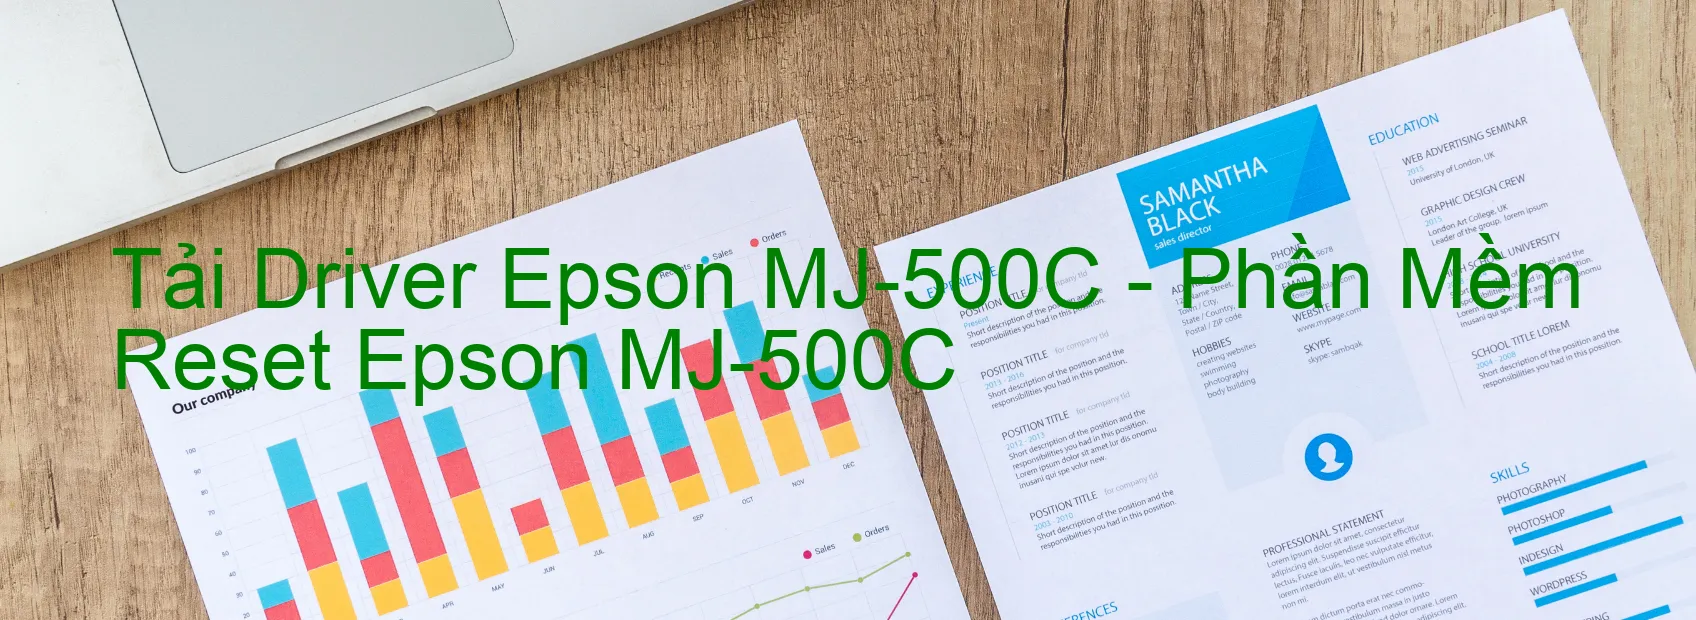 Driver Epson MJ-500C, Phần Mềm Reset Epson MJ-500C